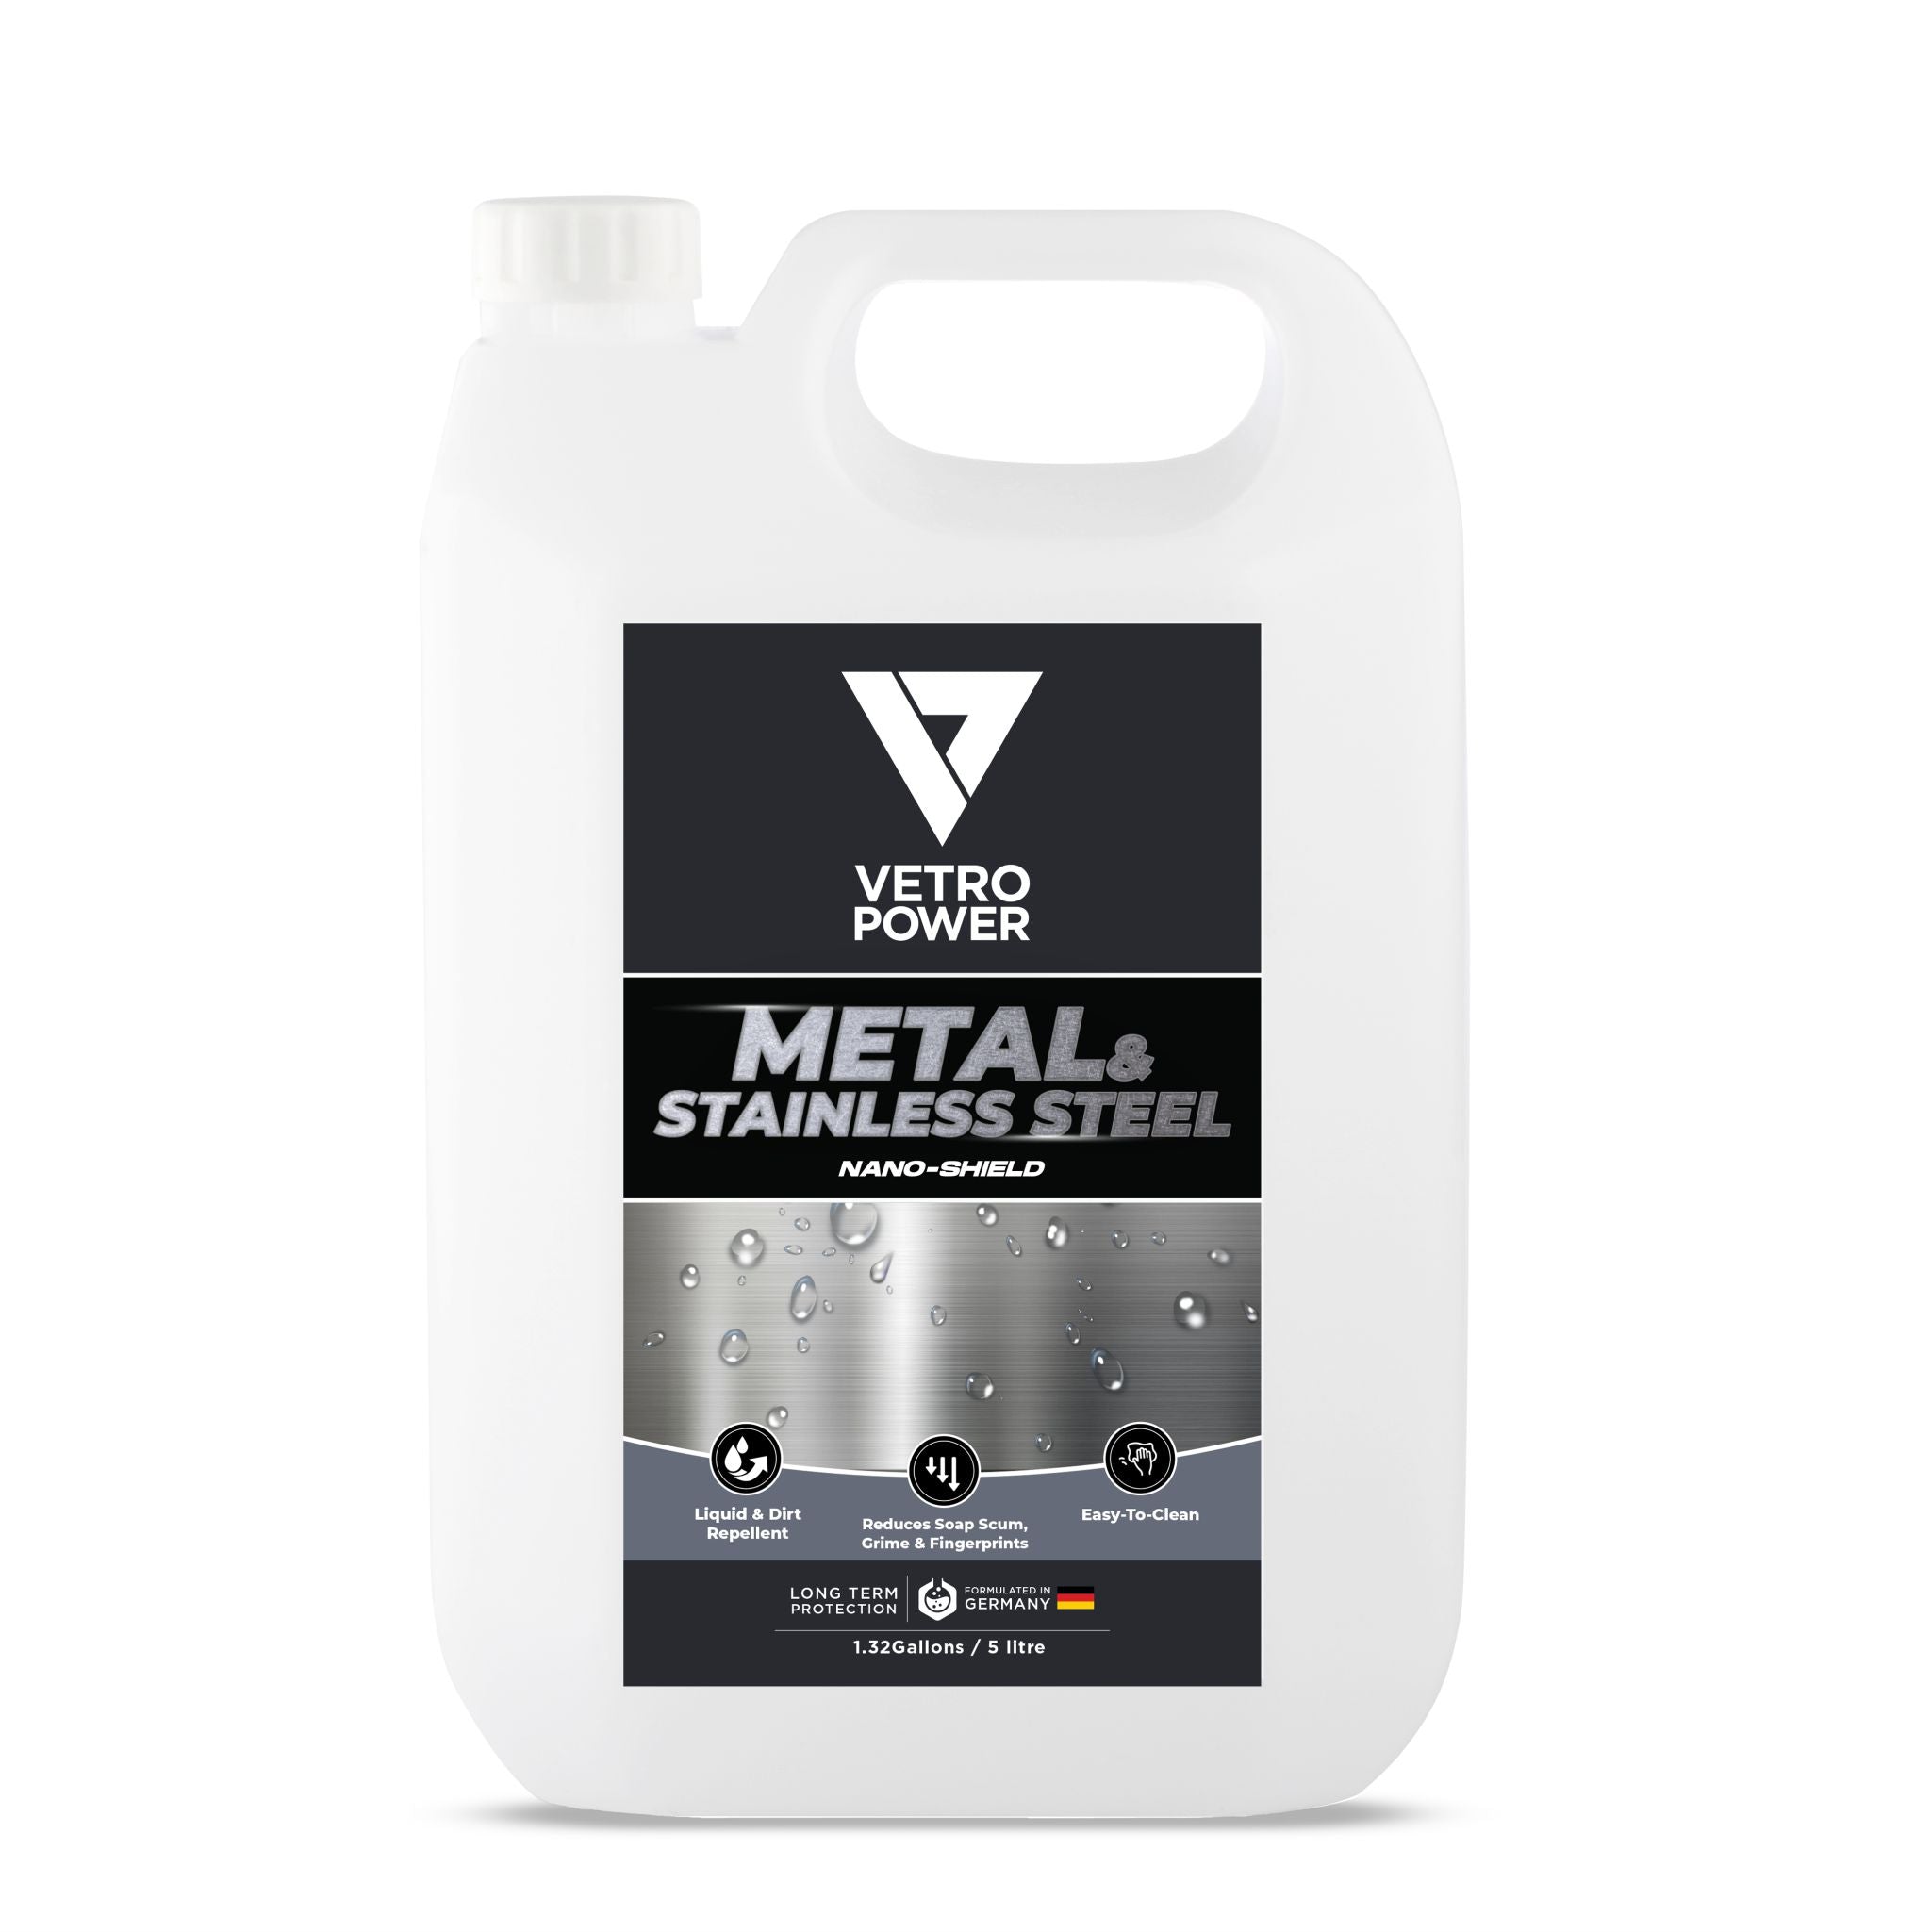 Vetro Power Metal & Stainless Steel Shield